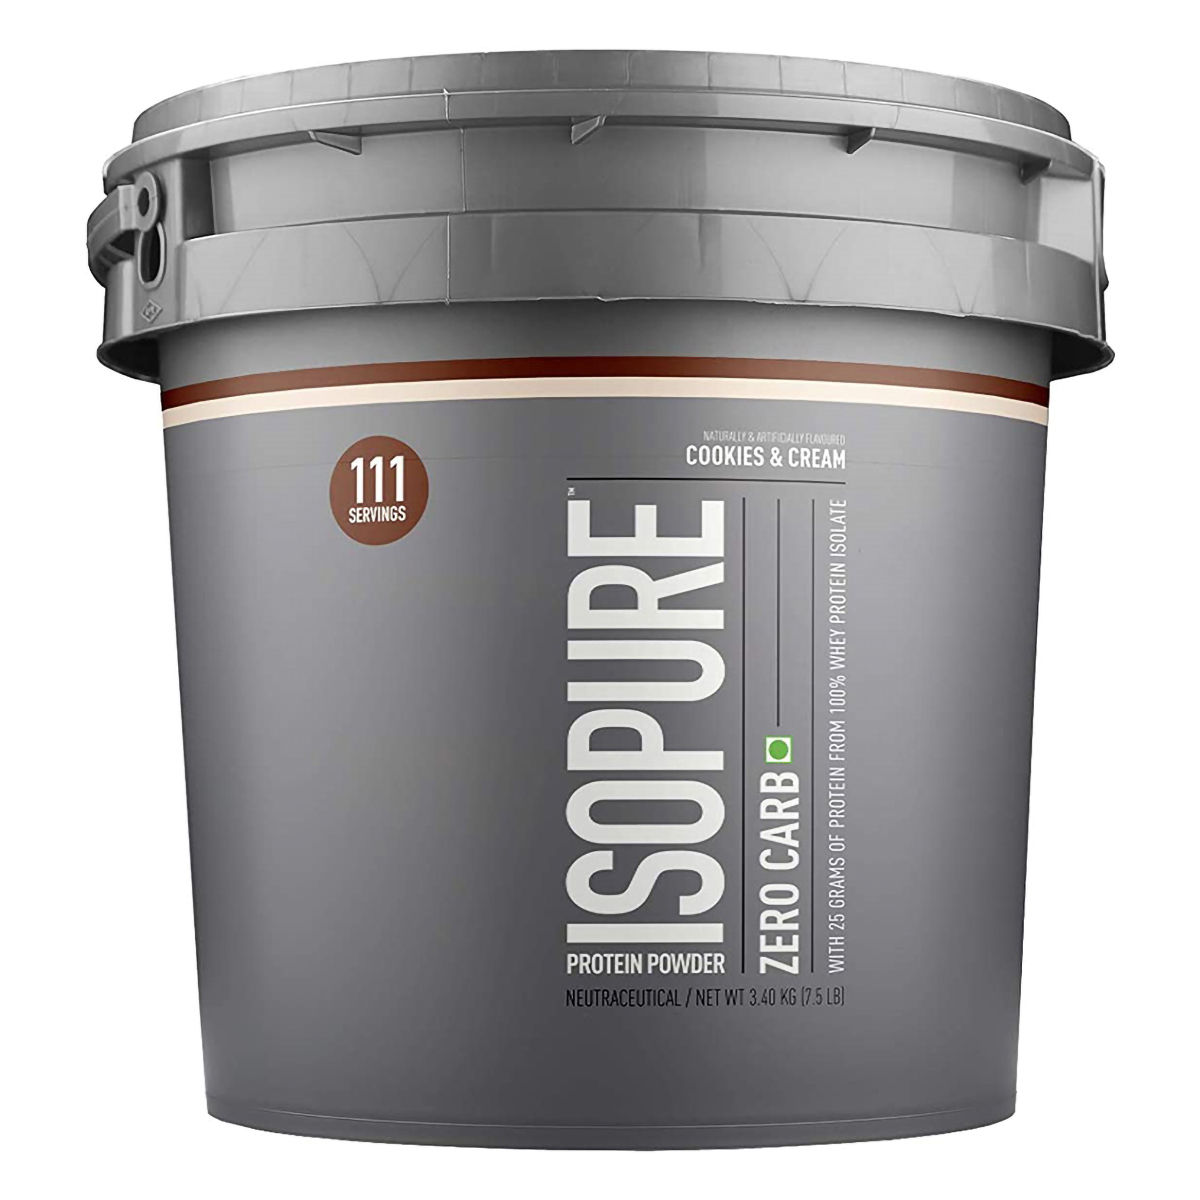 Buy Isopure Zero Carb 100% Whey Protein Isolate Cookies & Cream Flavour Powder, 7.5 lb Online